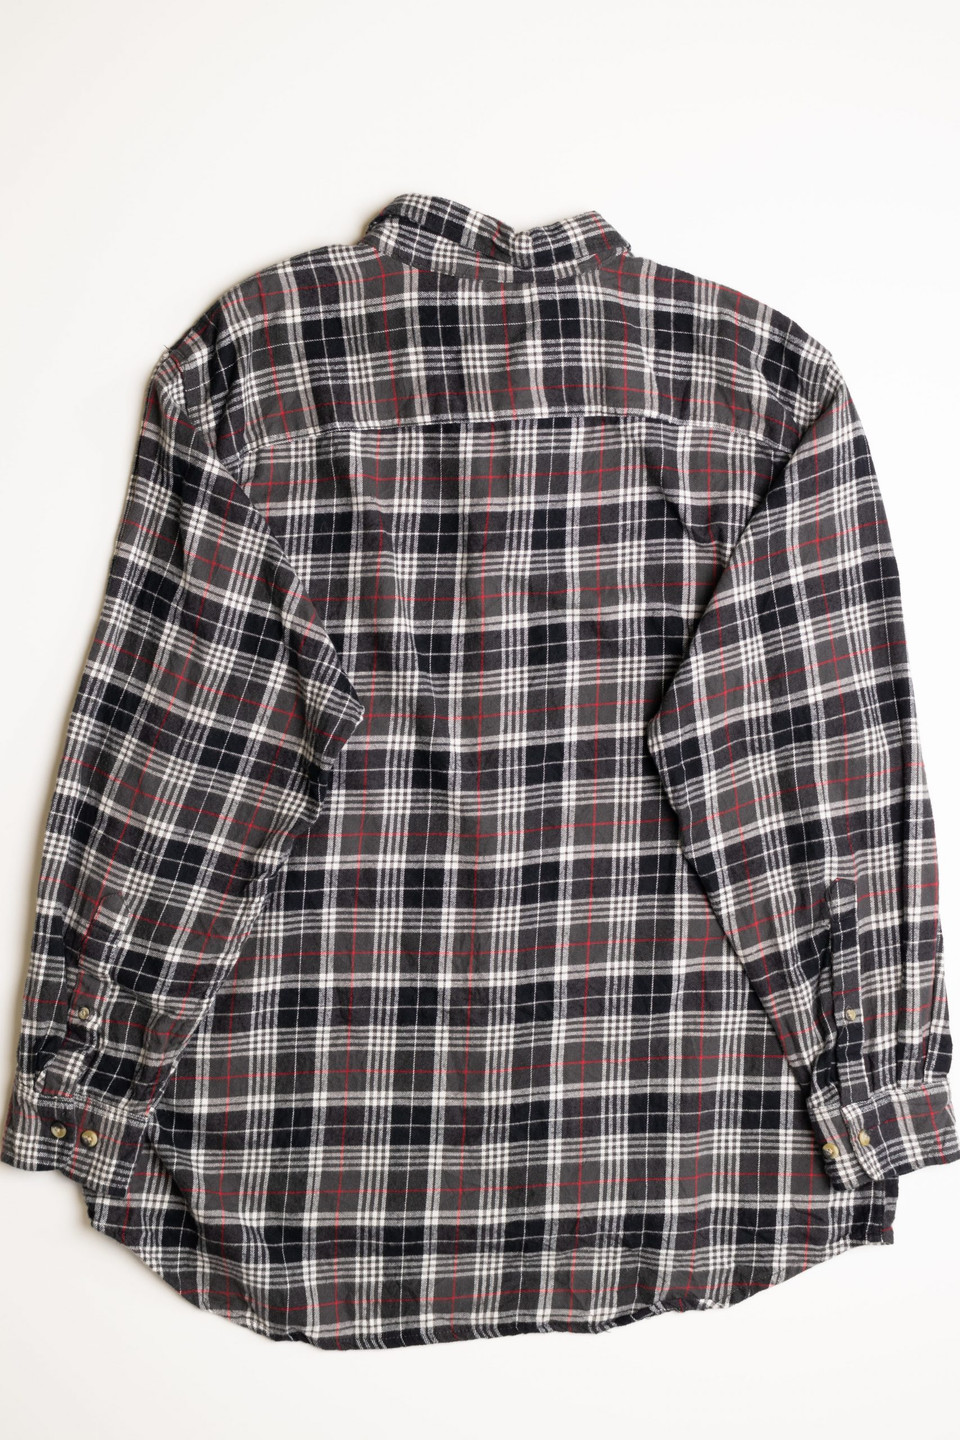 Hobbs Creek Flannel Shirt 1 - Ragstock.com